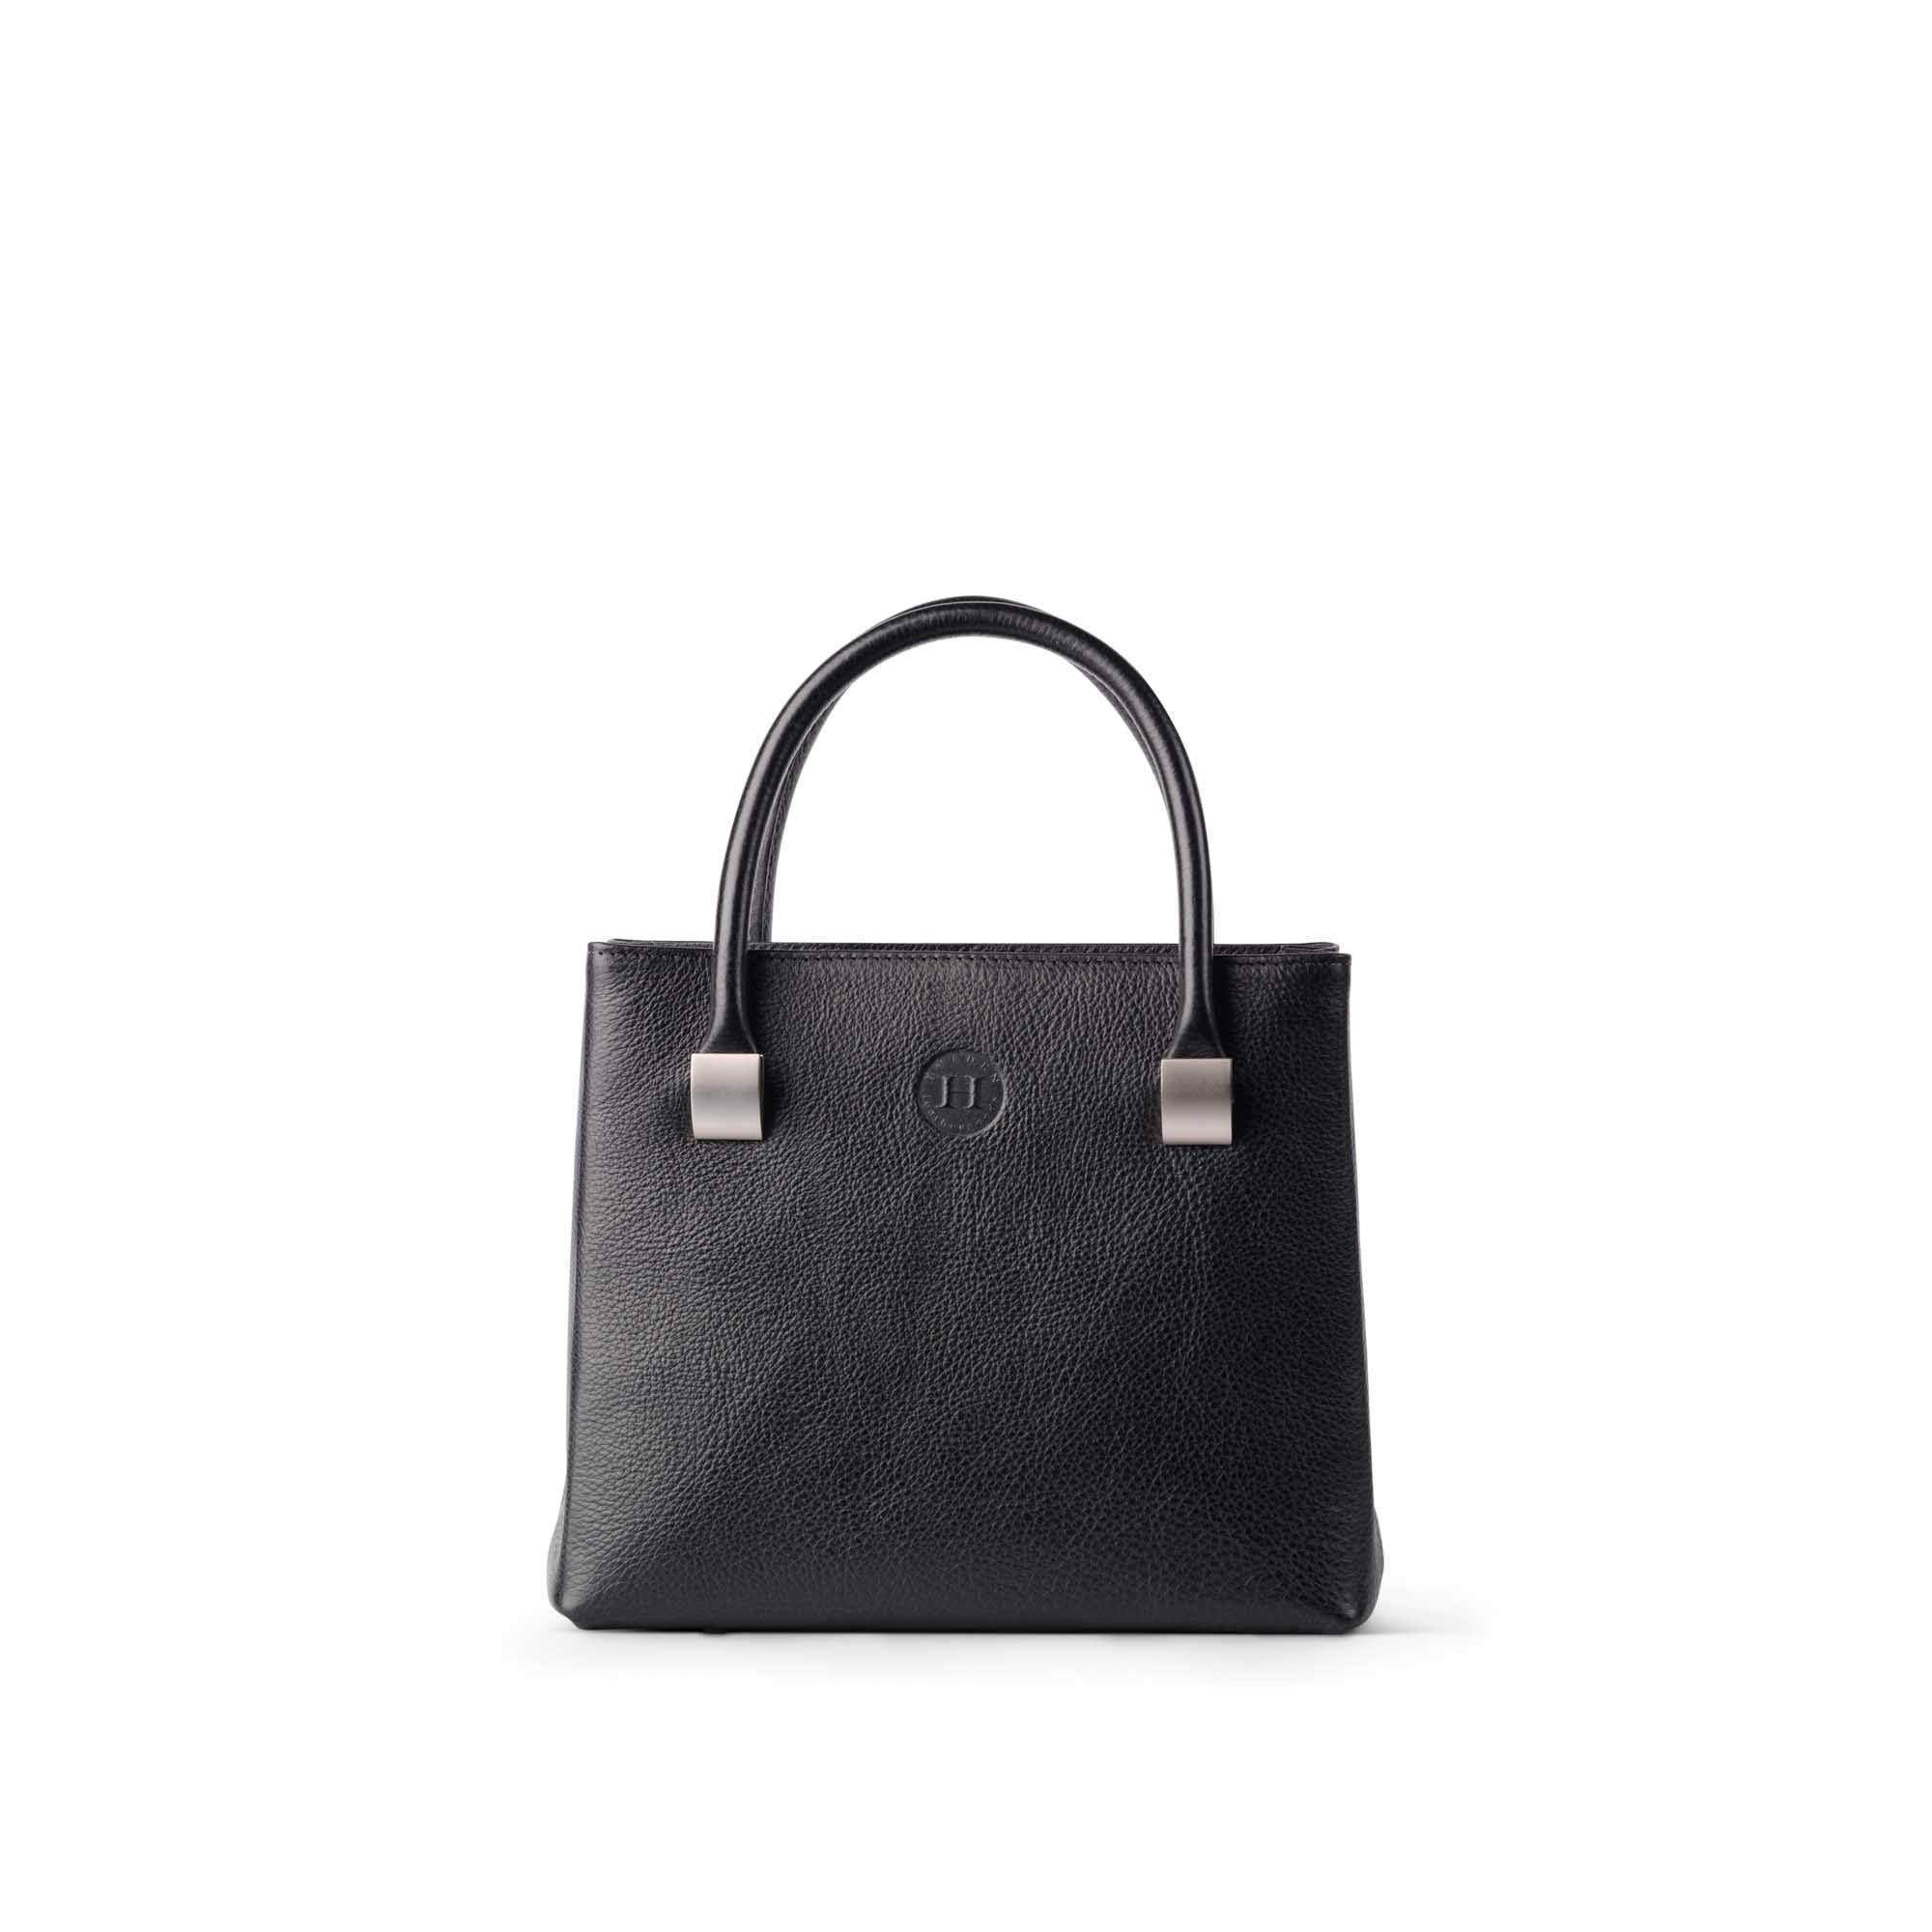 Aoife Leather Handbag Medium Black - Holden Leathergoods, leather bags handmade in Ireland